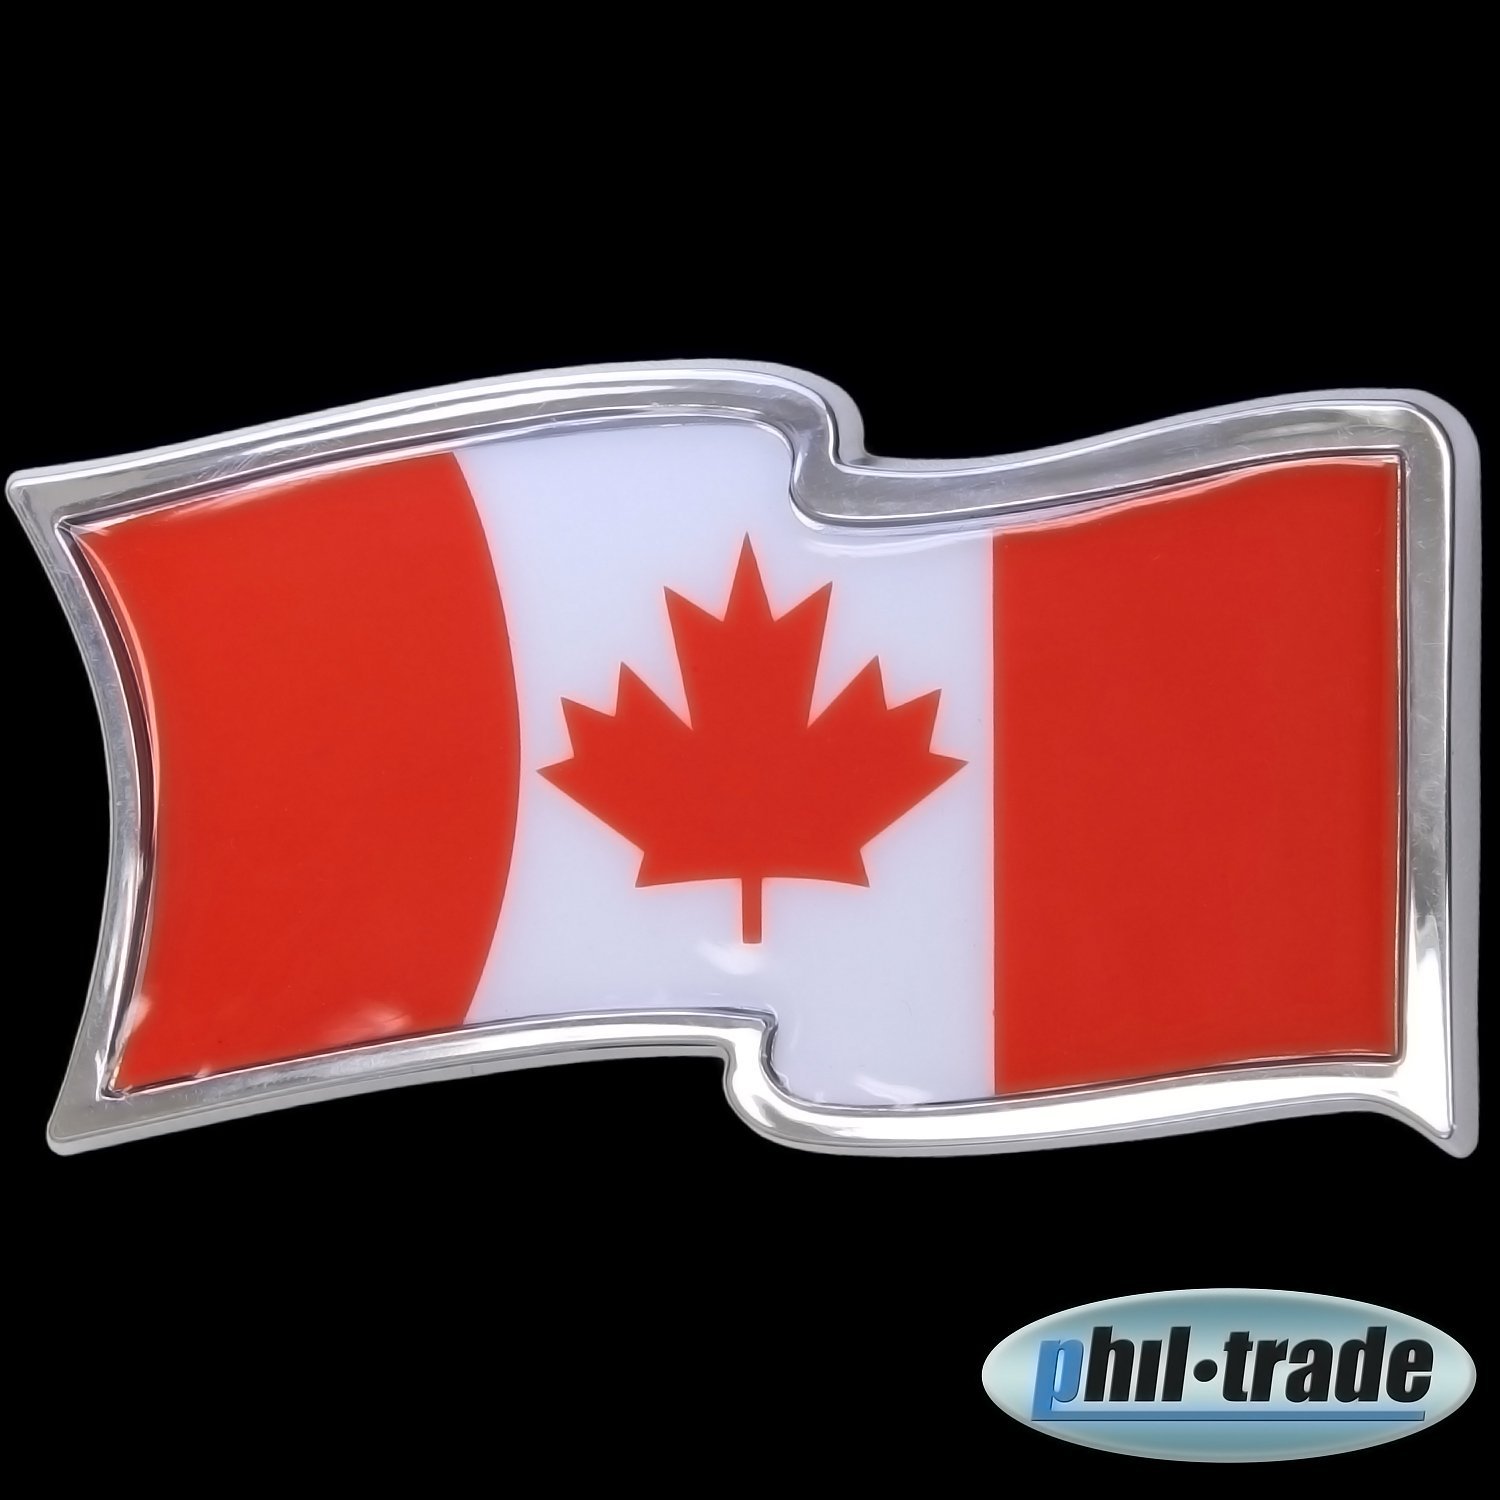 3D Chrom Emblem Aufkleber Flagge Kanada Canada canadian maple leaf flag von phil trade